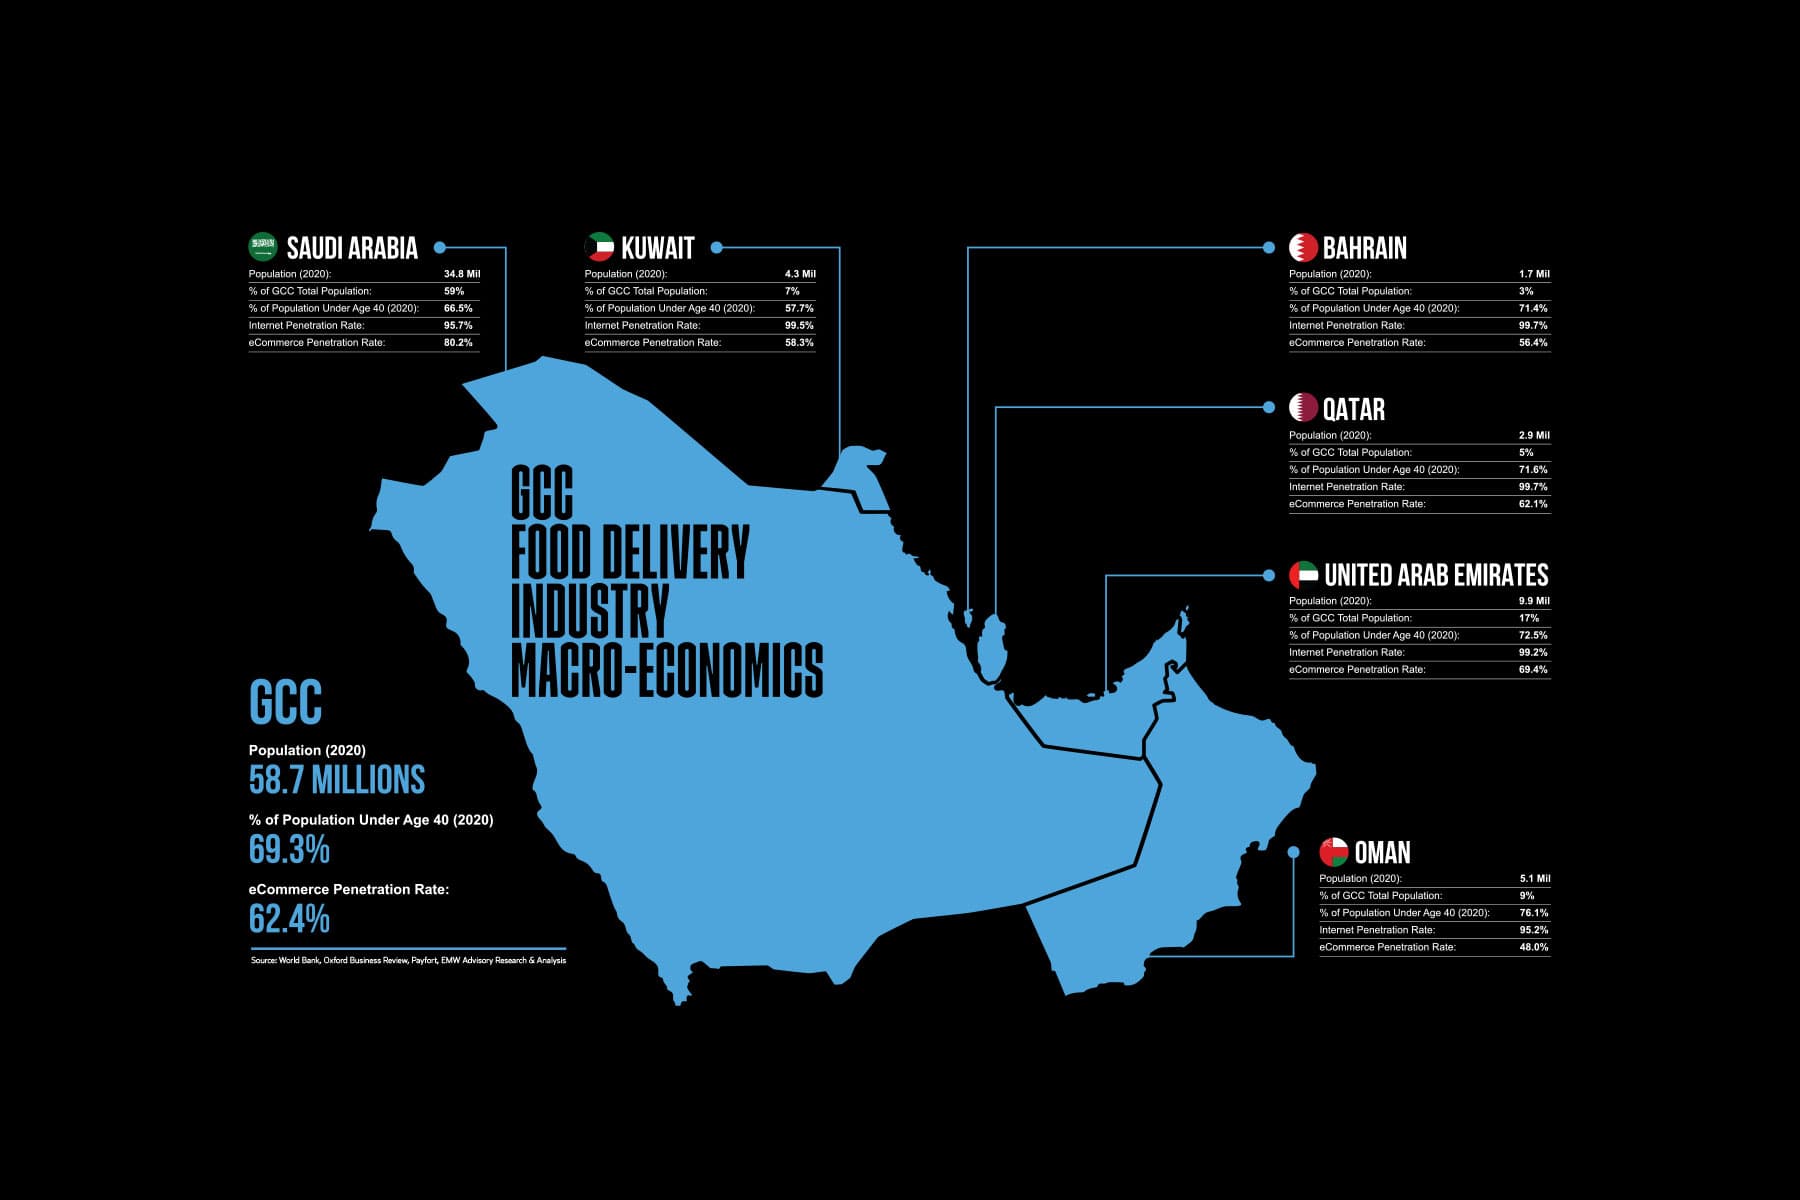 GCC Food Delivery Industry Macro-Economics